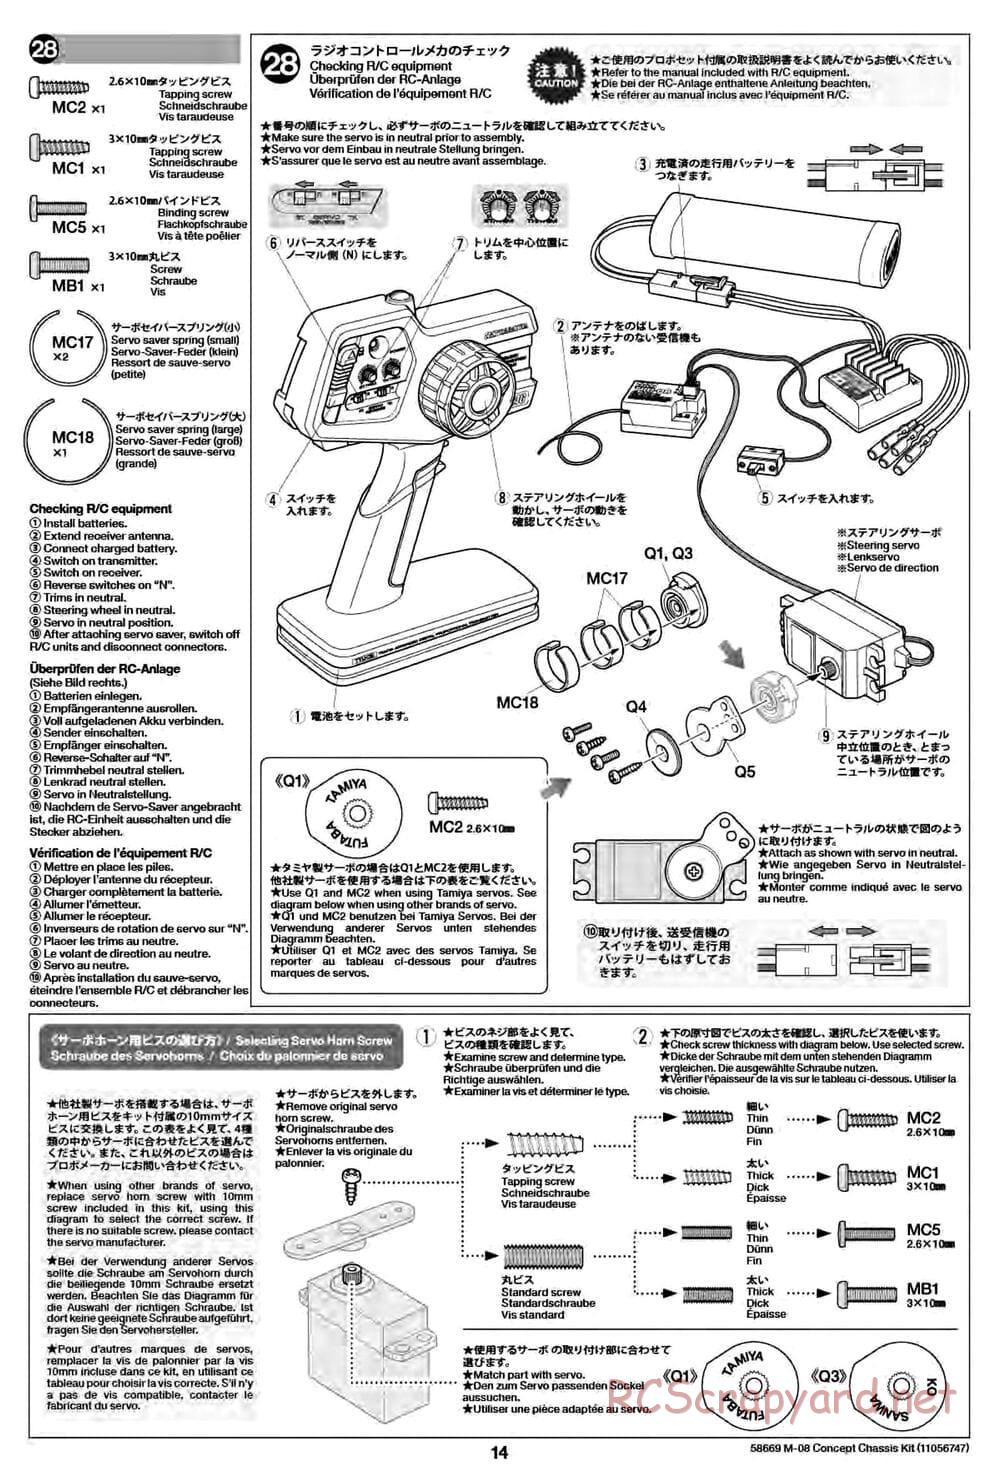 Tamiya - M-08 Concept Chassis - Manual - Page 14